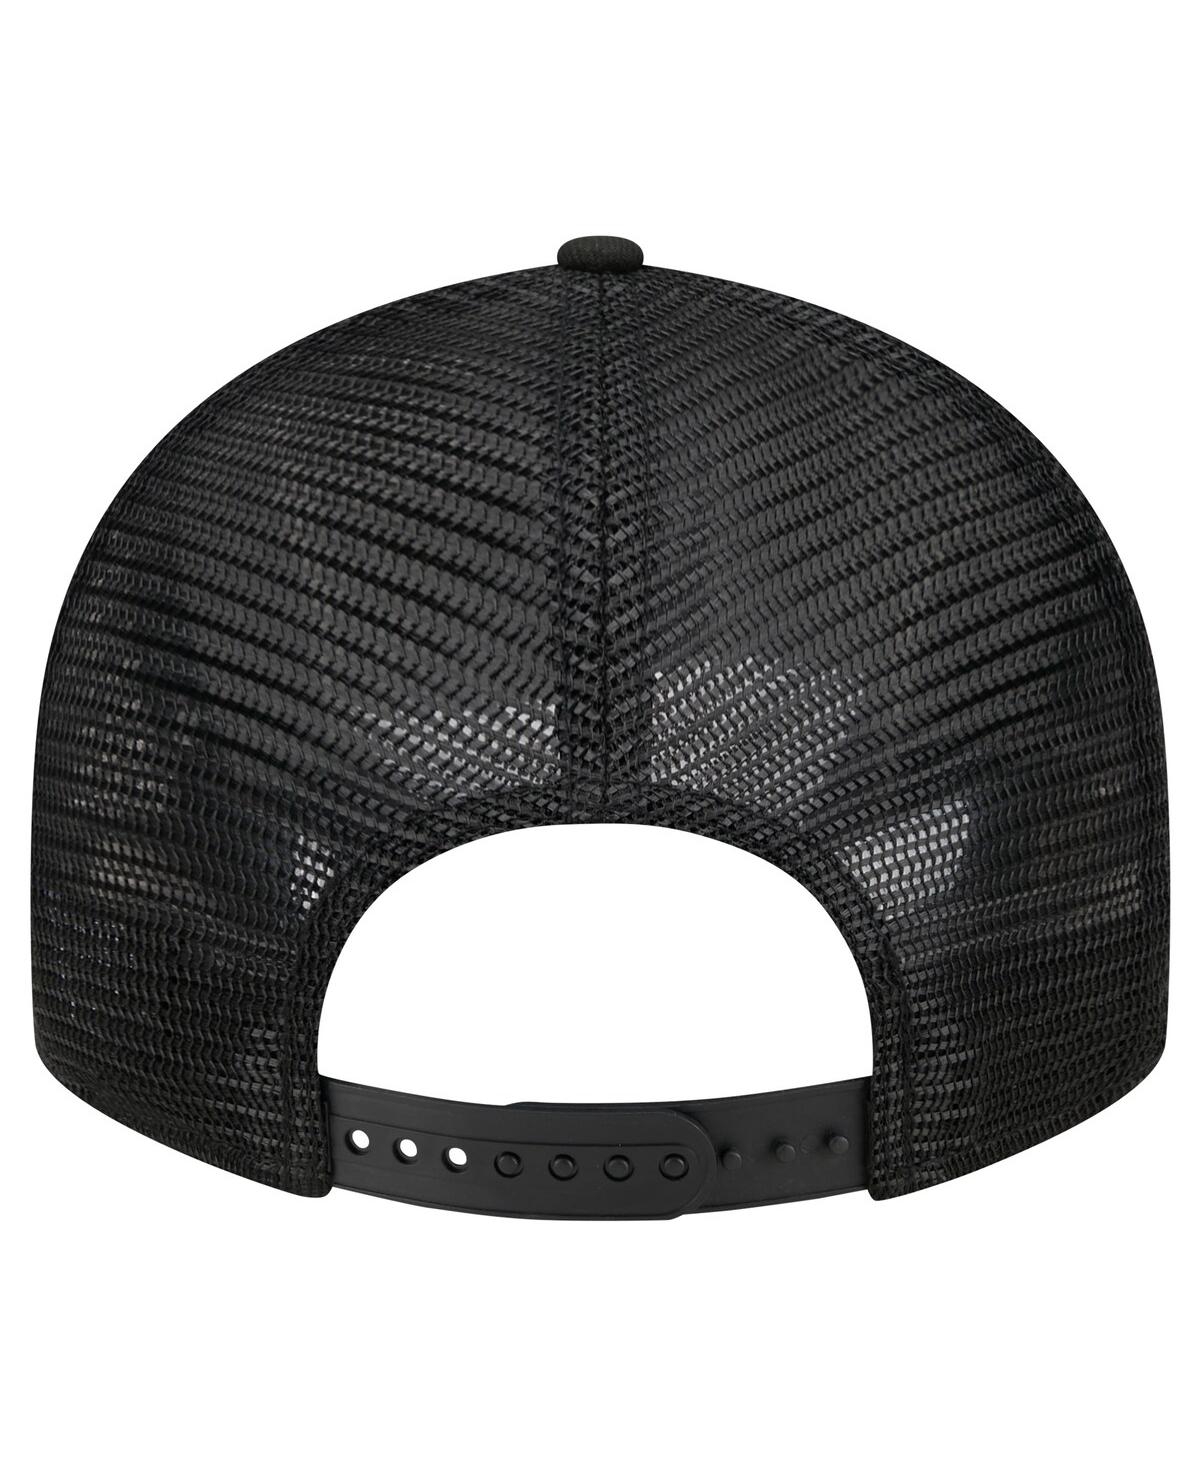 Shop New Era Men's Black Lsu Tigers Labeled 9fifty Snapback Hat